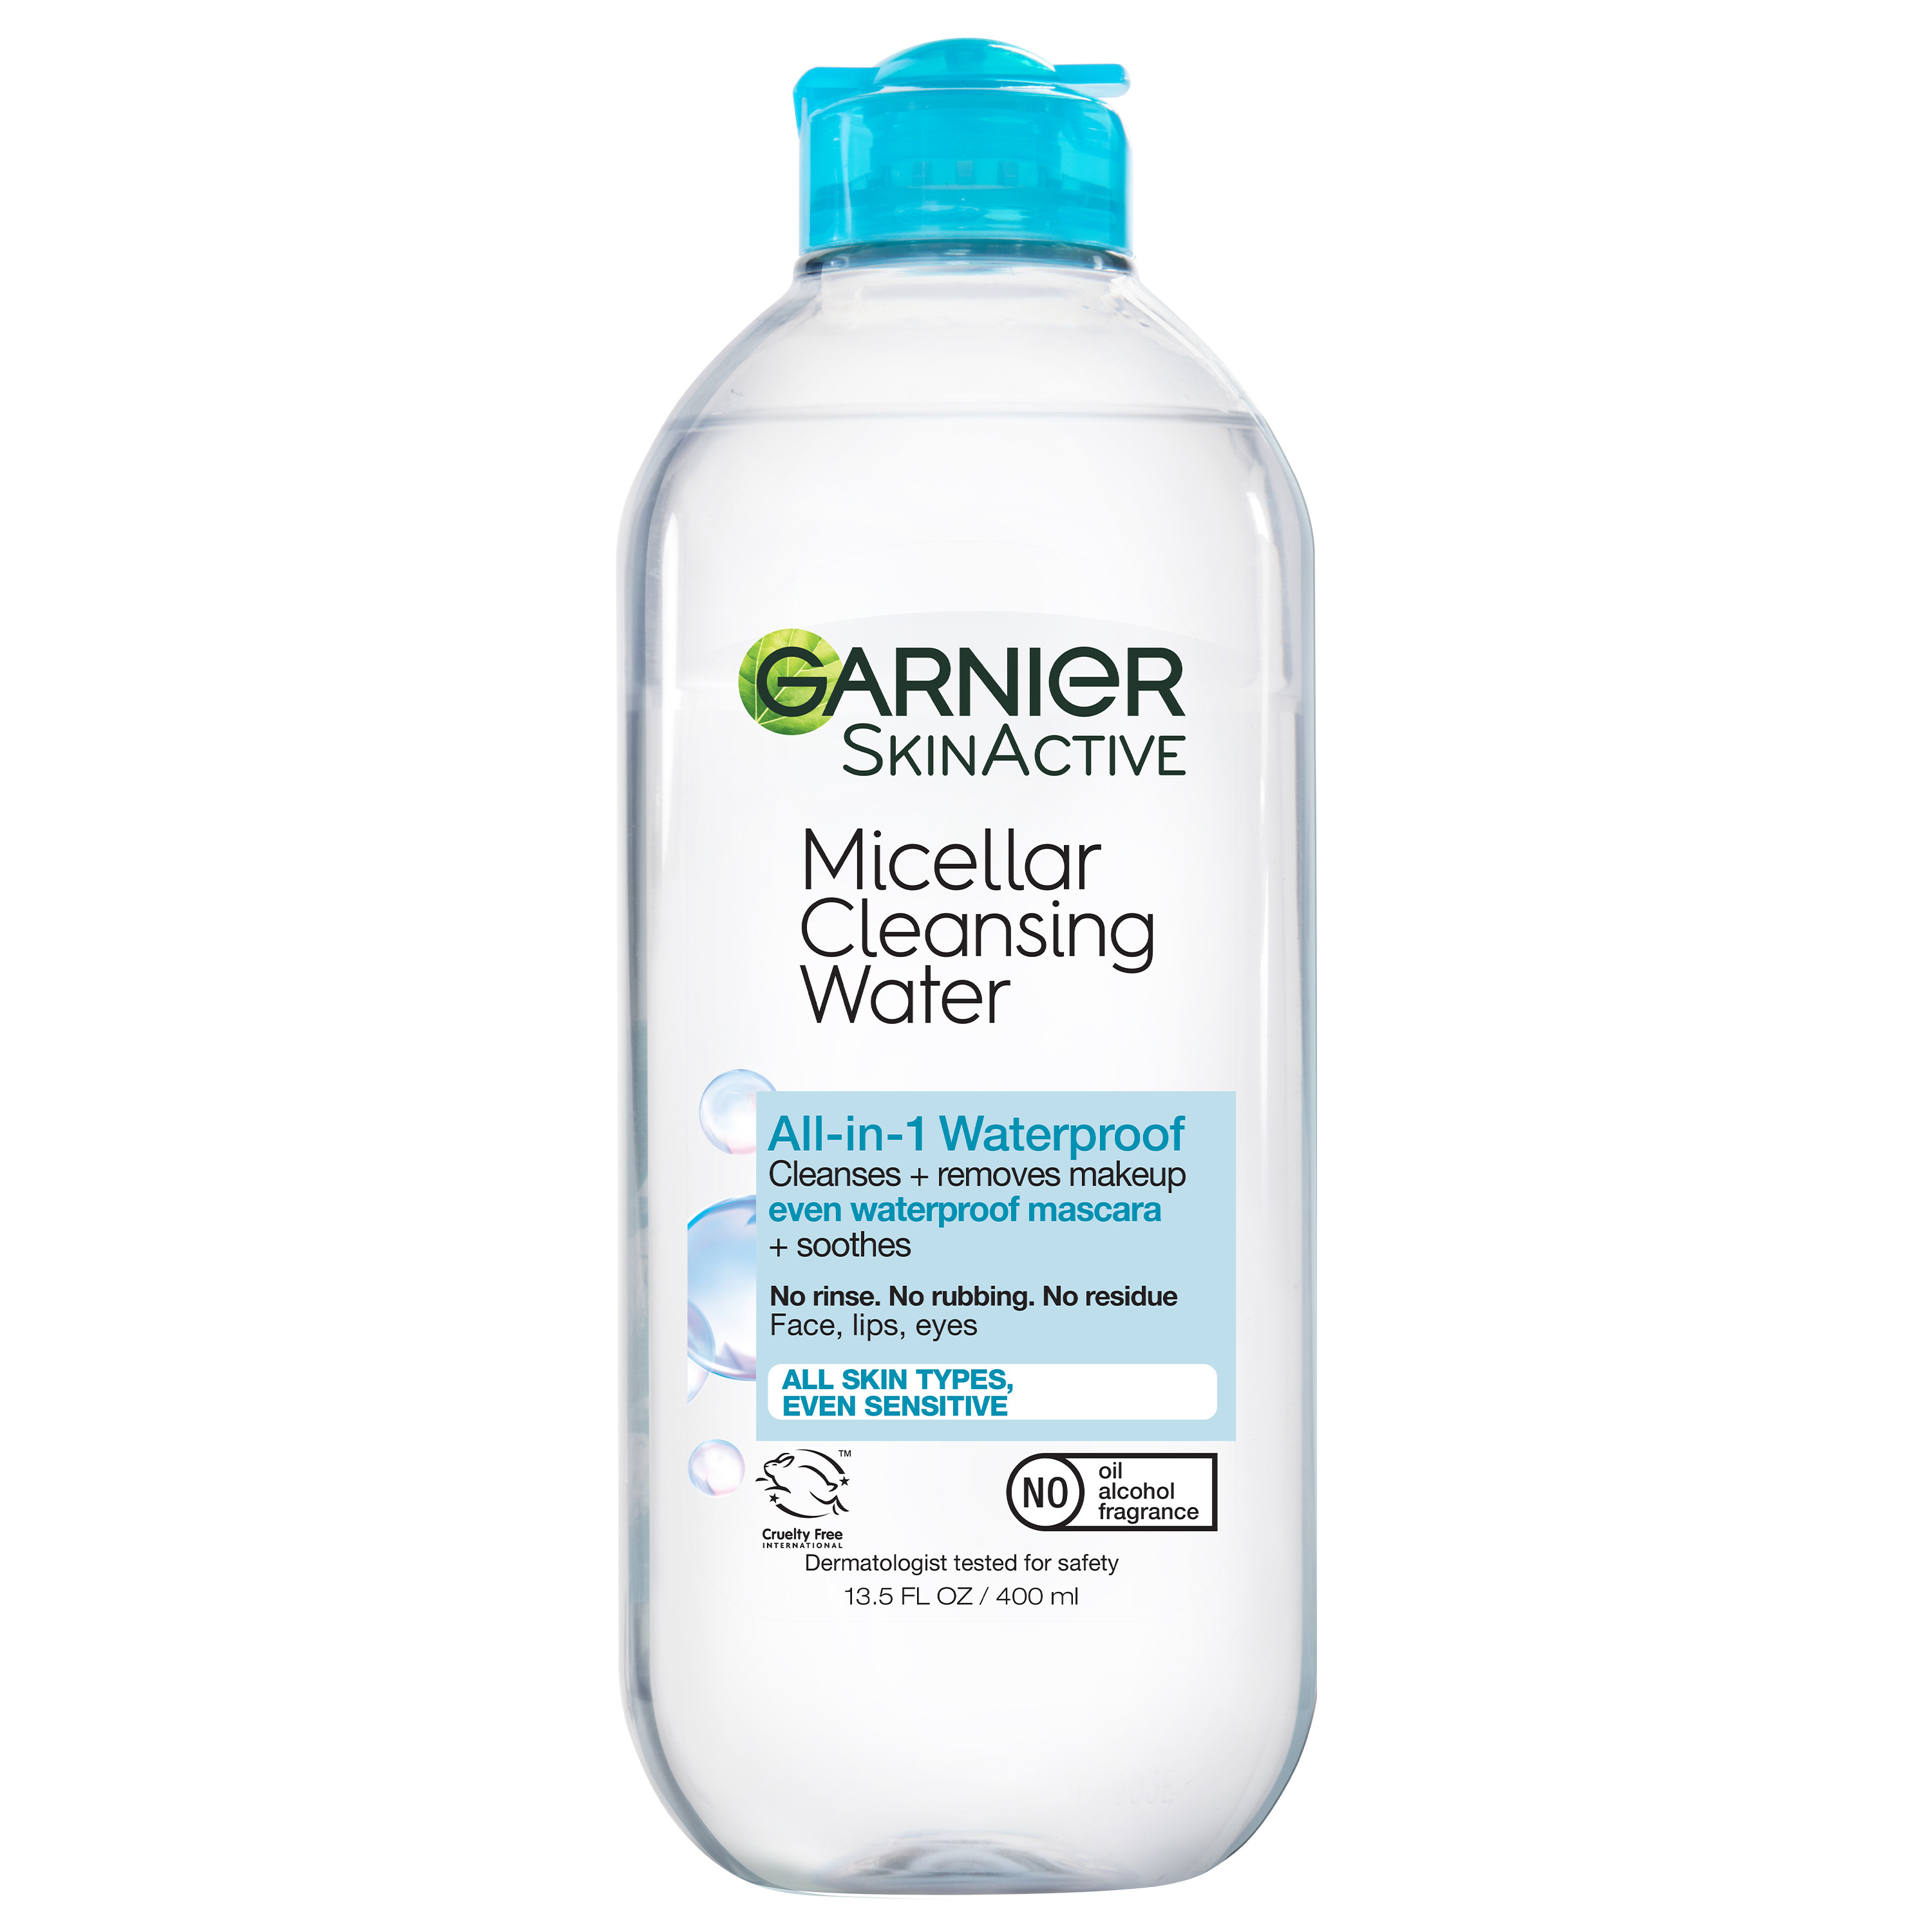 Garnier SkinActive Micellar Cleansing Water All in 1 Removes Waterproof Makeup, 13.5 fl oz - image 1 of 11